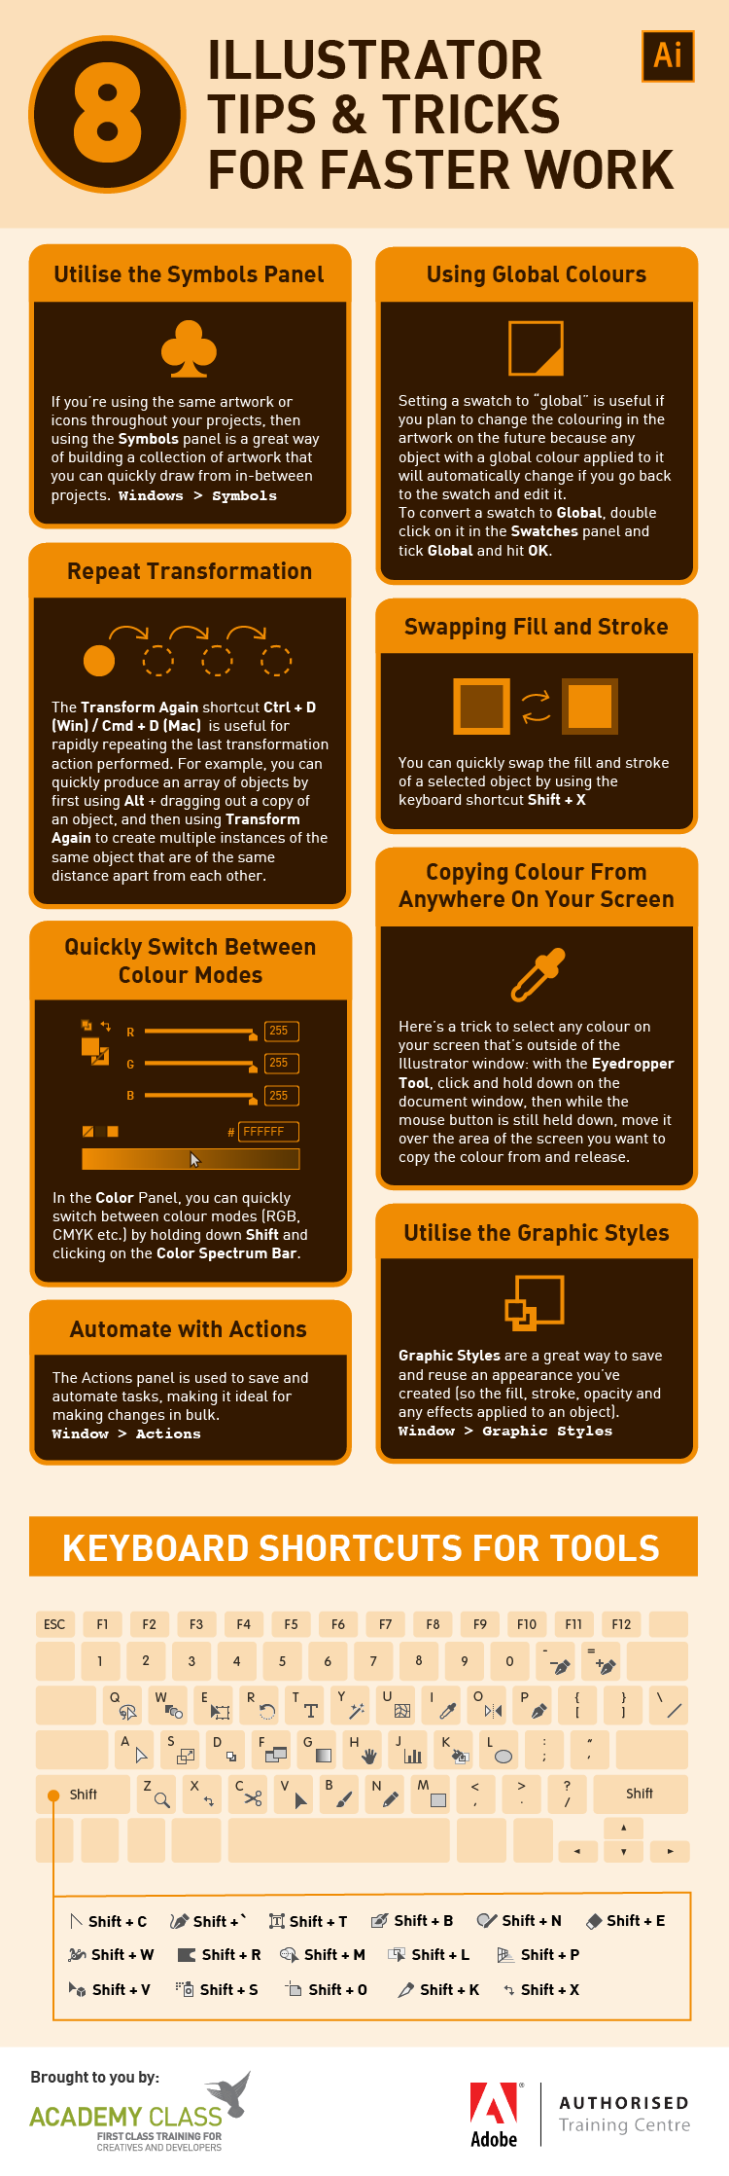 adobe-illustrator-tips-tricks-shortcuts-infographic